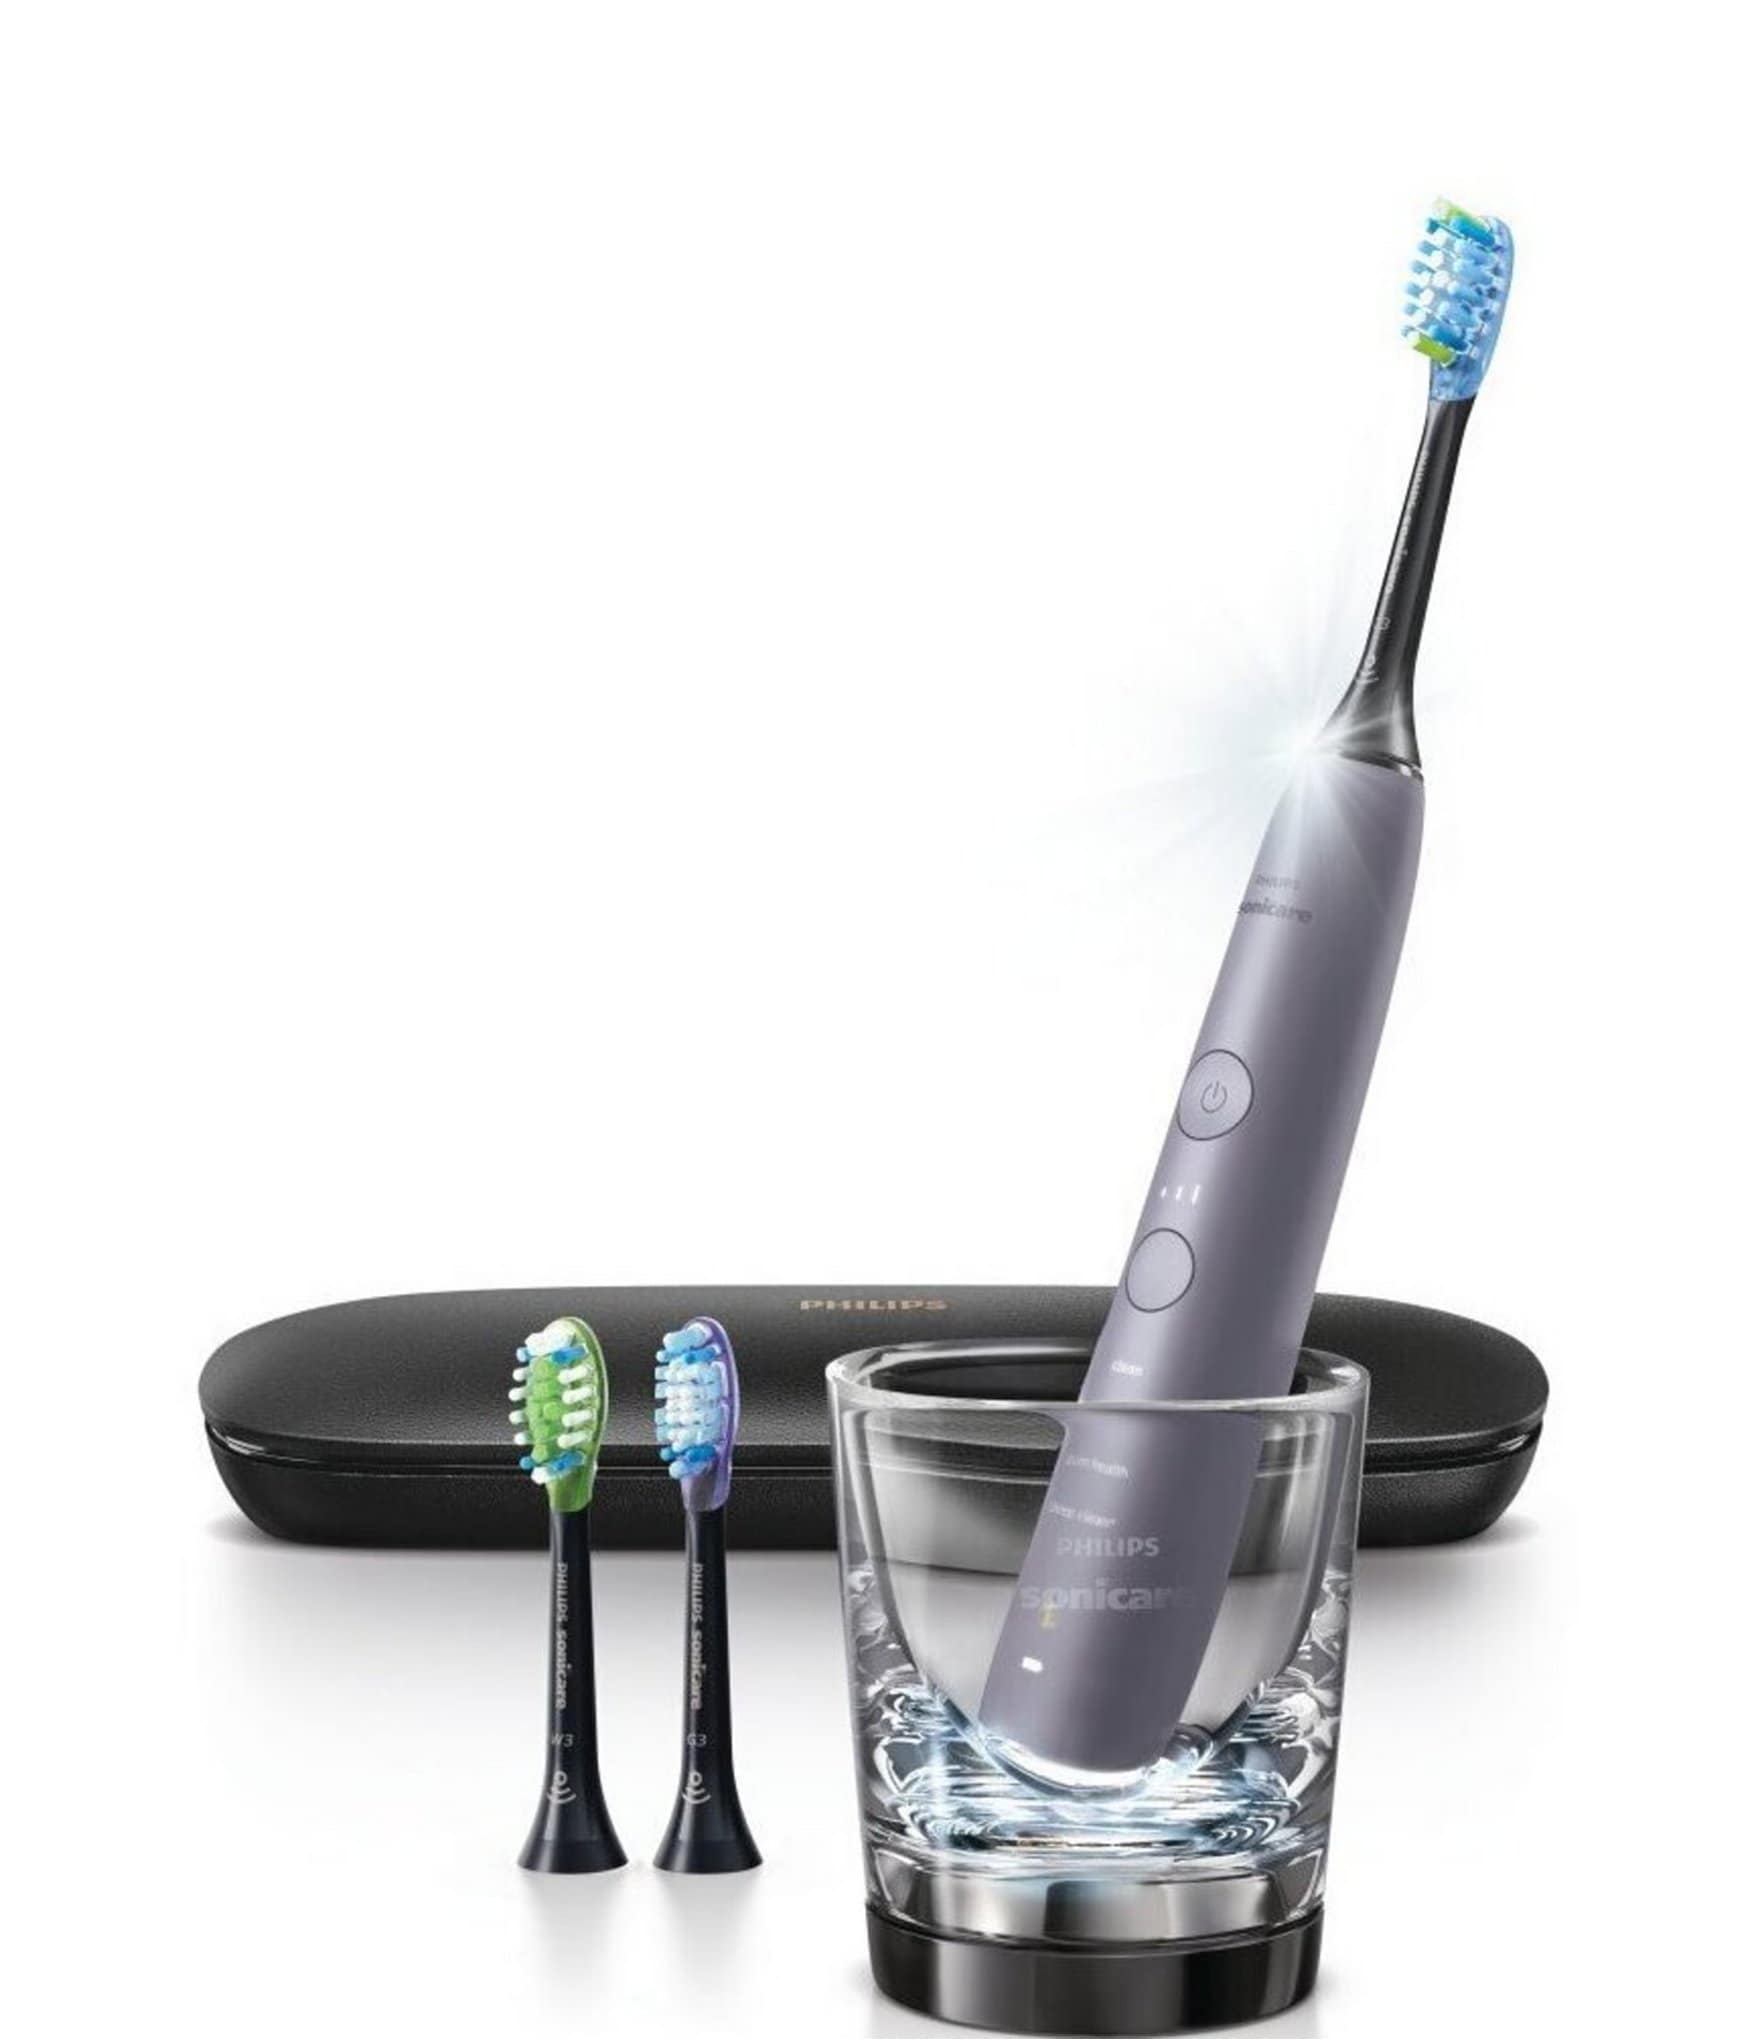 philips-sonicare-diamondclean-smart-9300-electric-toothbrush-dillard-s